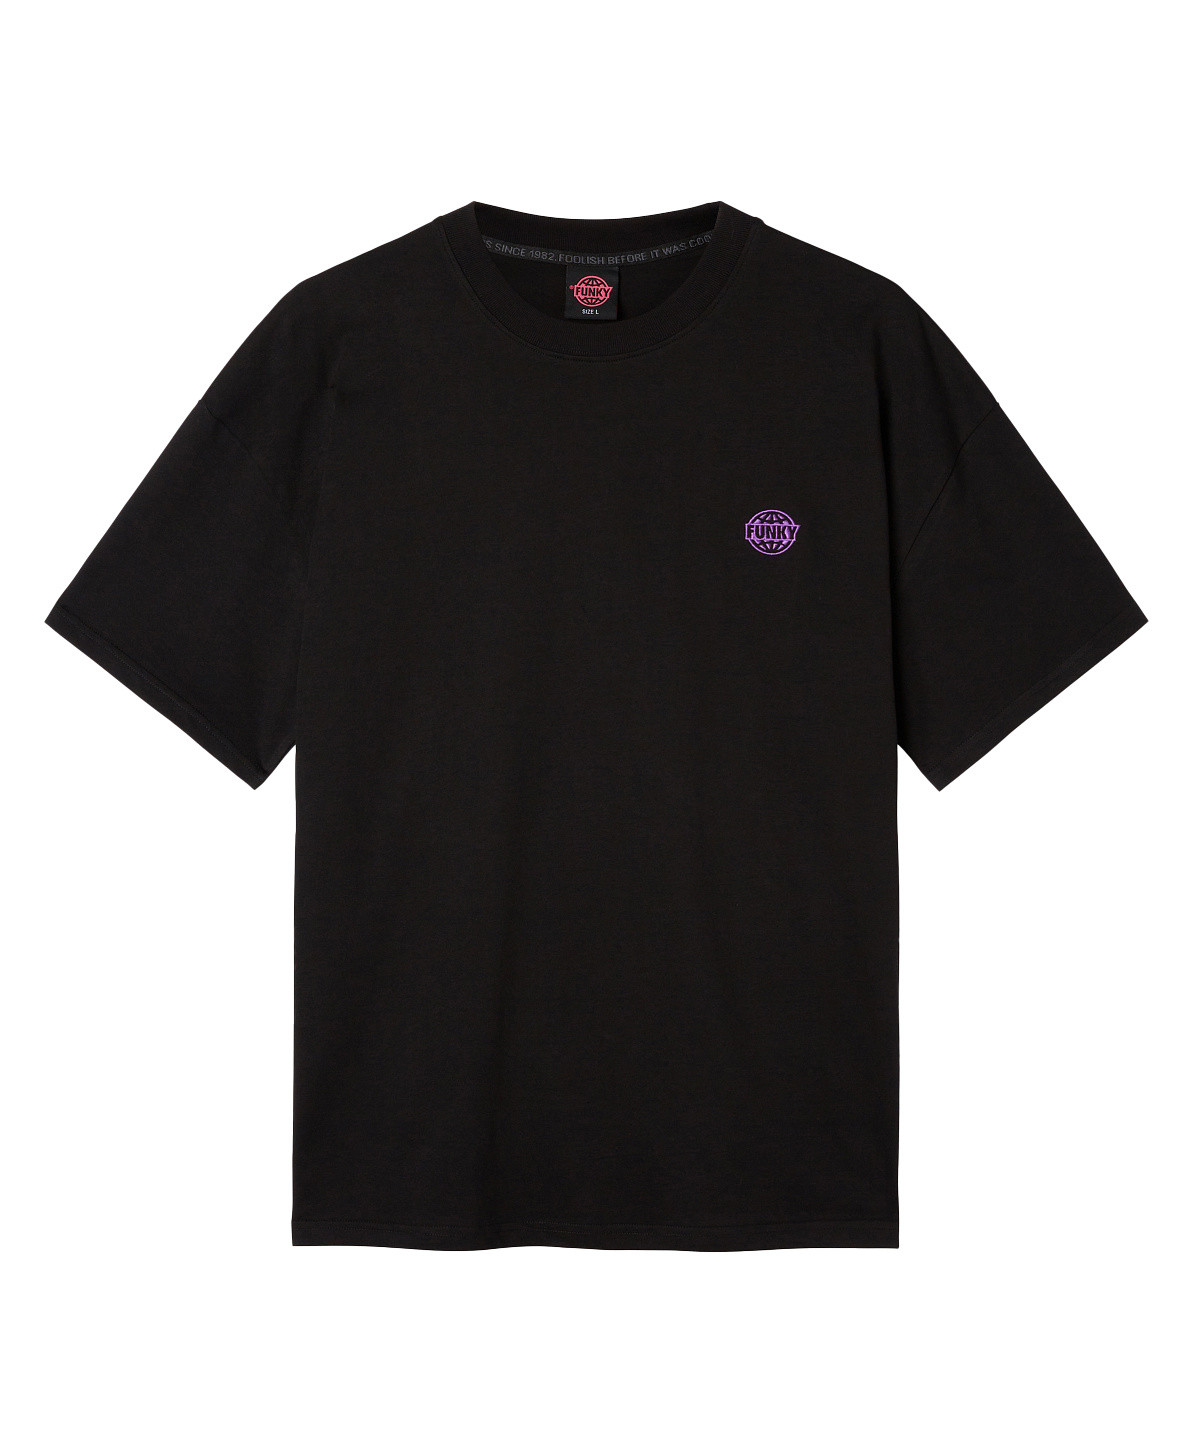 Funky - Crewneck T-shirt with oldschool print, Black, large image number 0